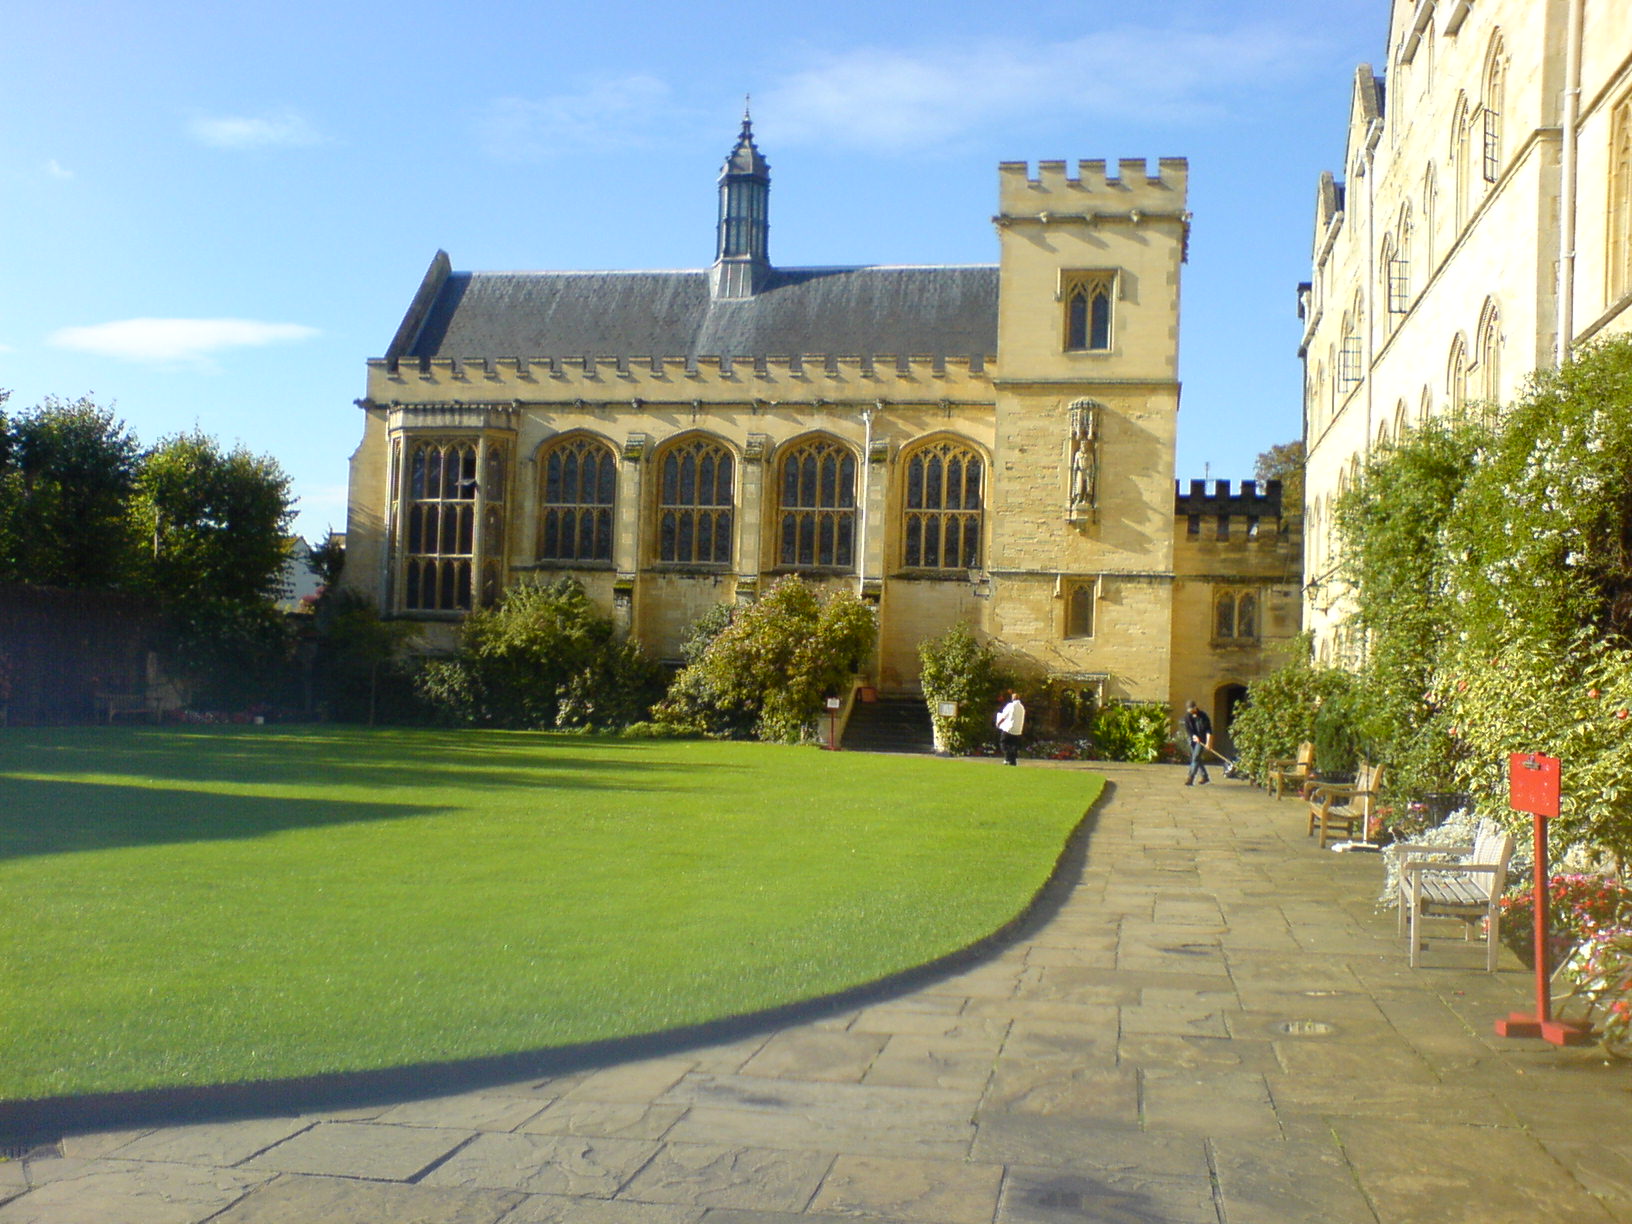 Pembroke College, Oxford University